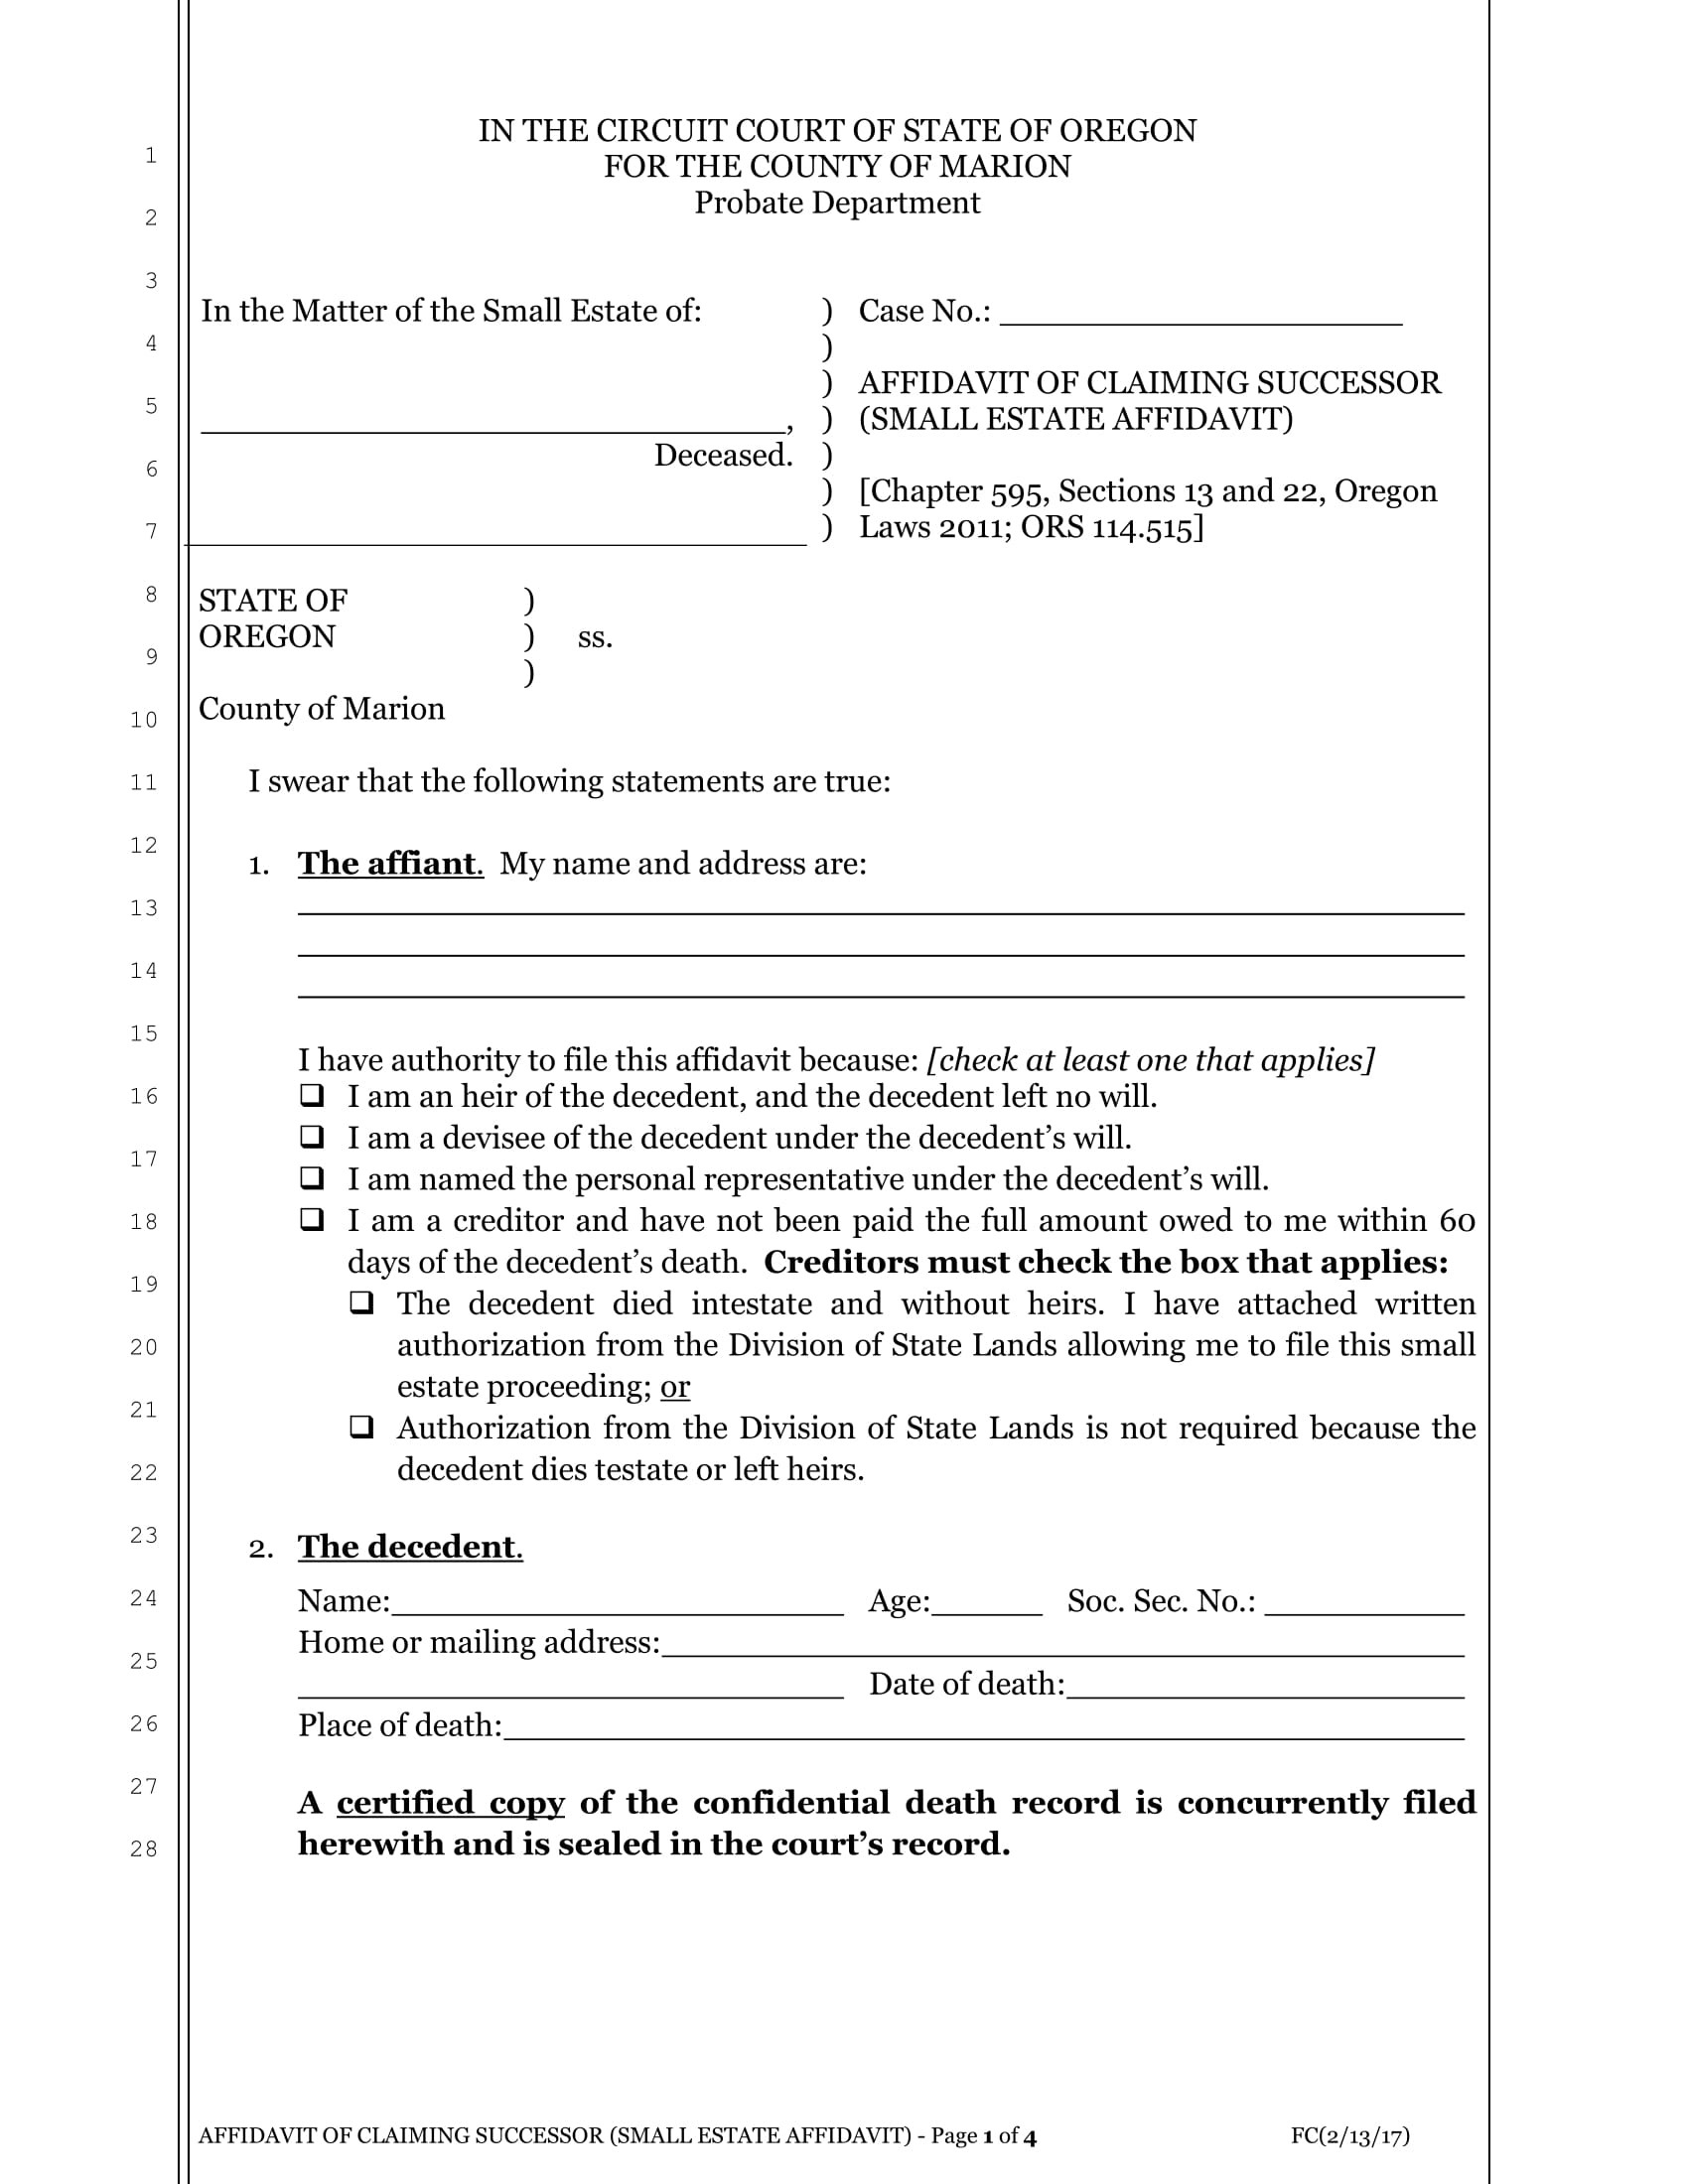 small estate claiming successor affidavit form 1